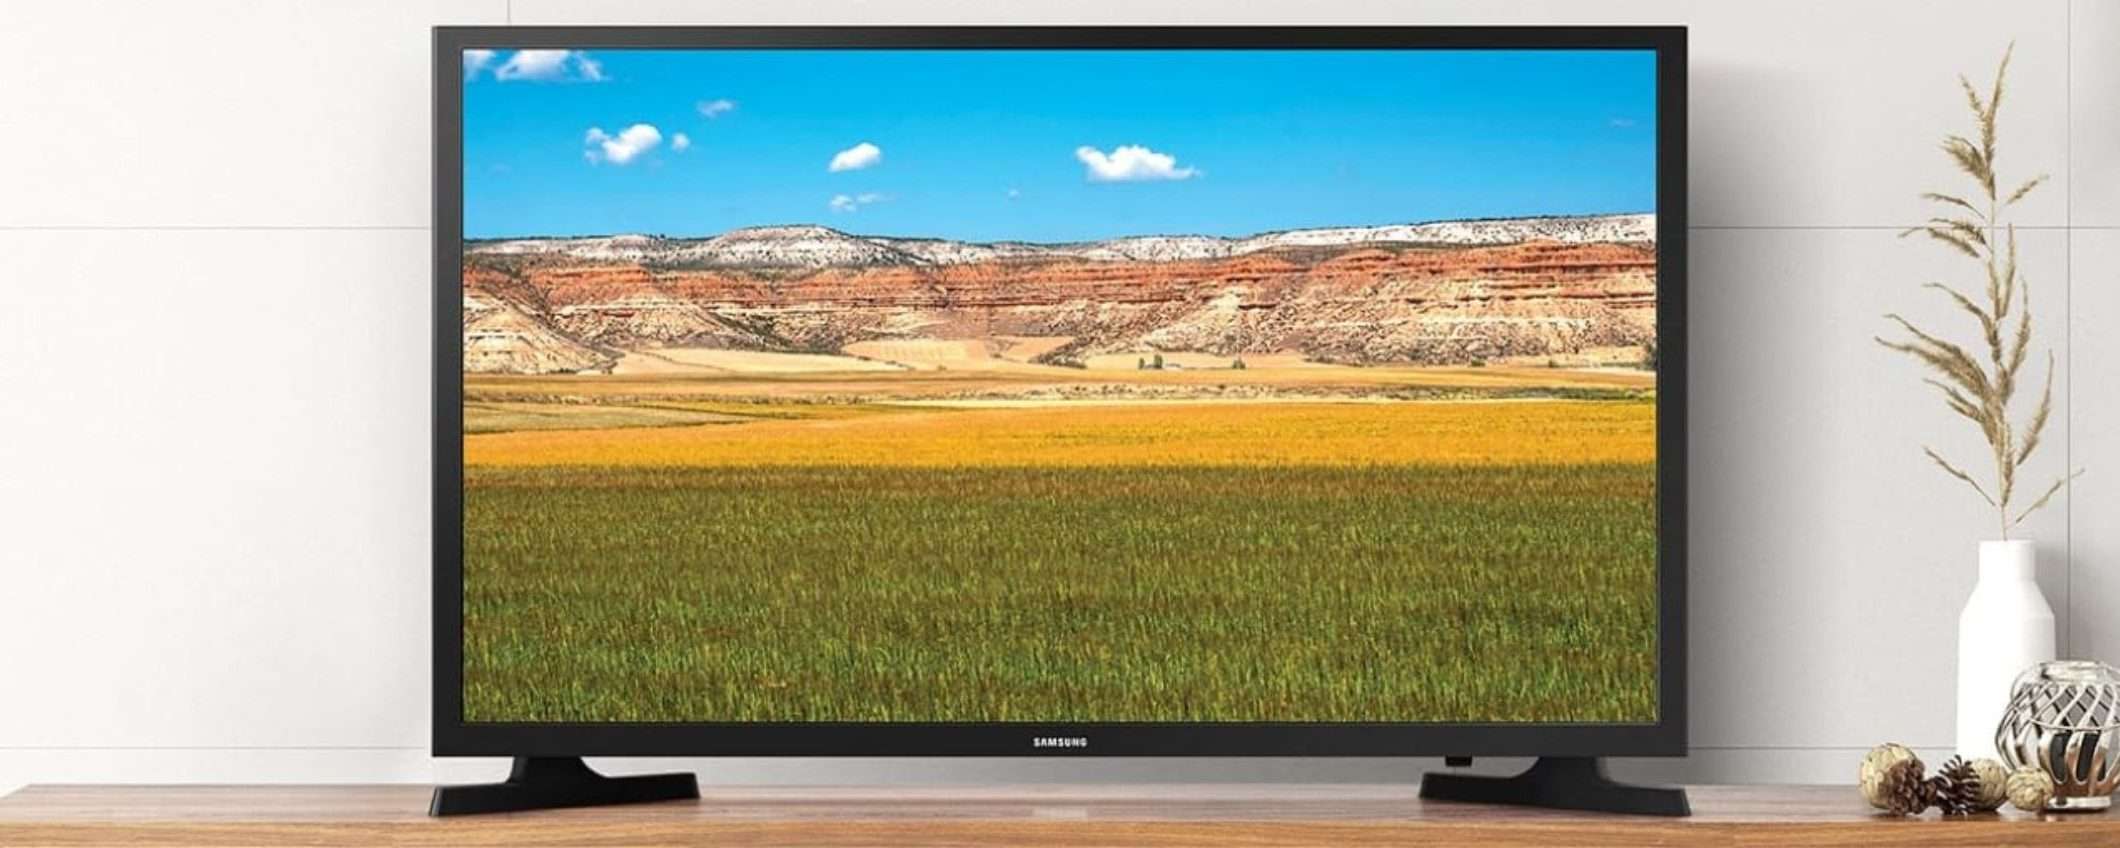 Samsung sconto BOMBA 40%: smart TV 32